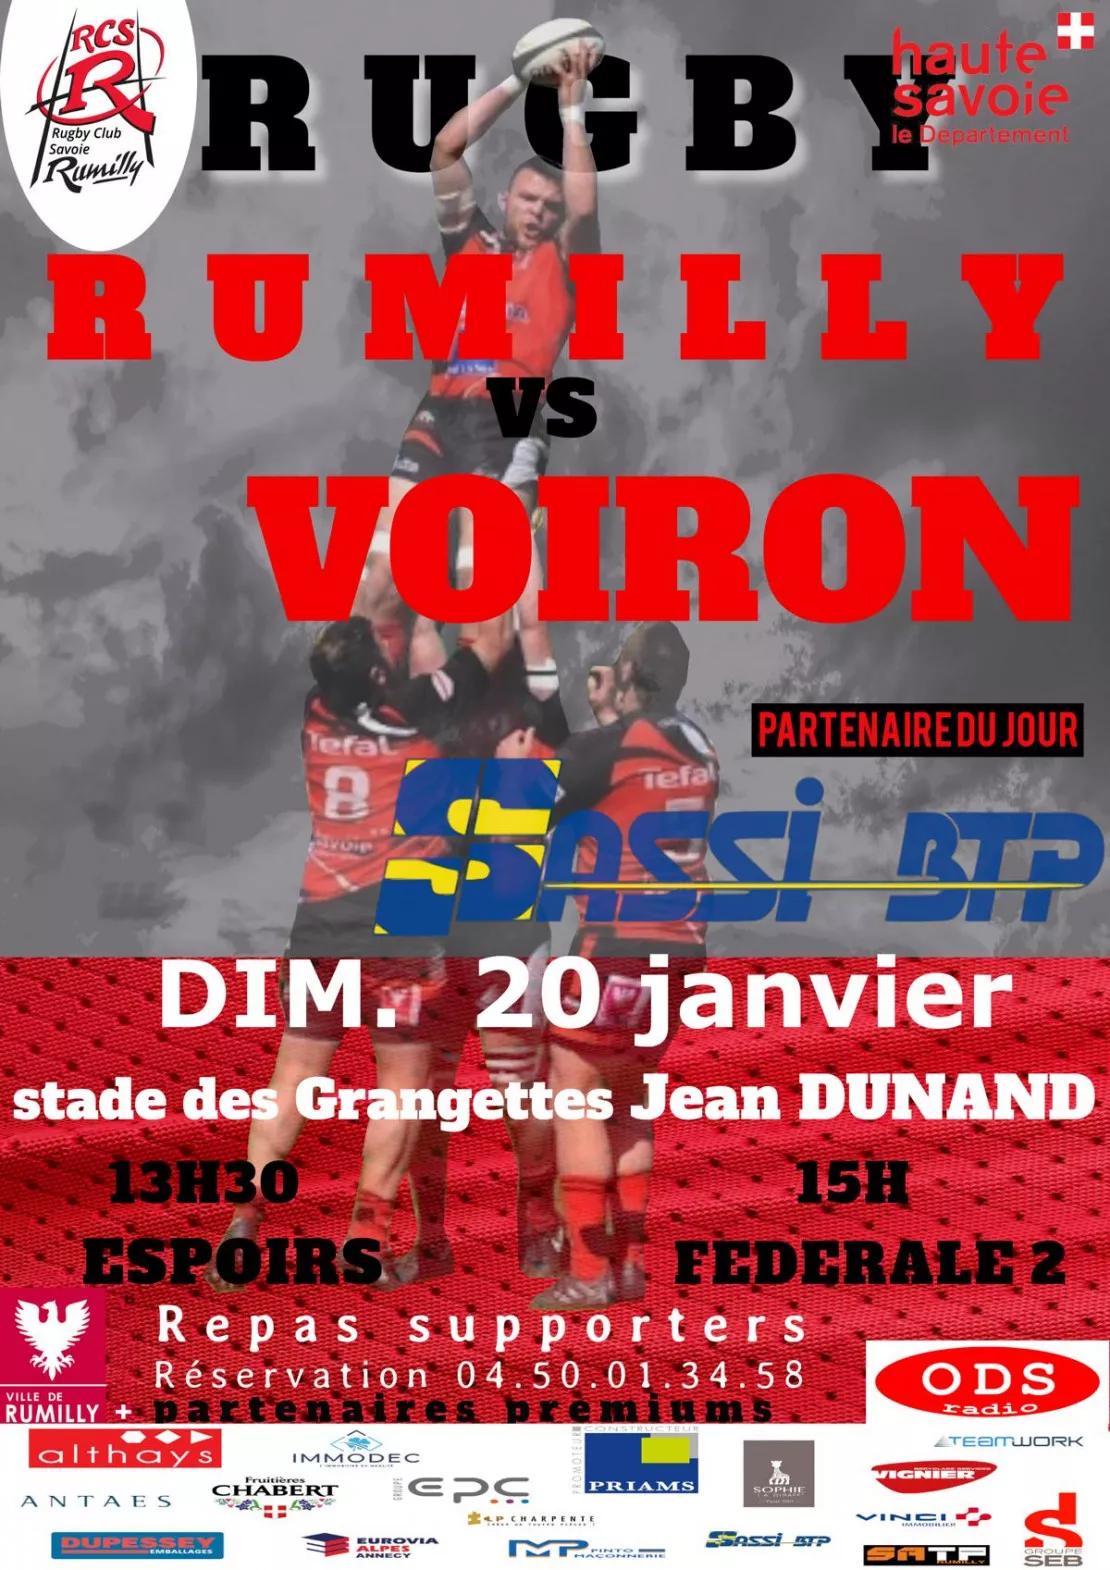 PARTENAIRE - Match du Rugby club de Rumilly